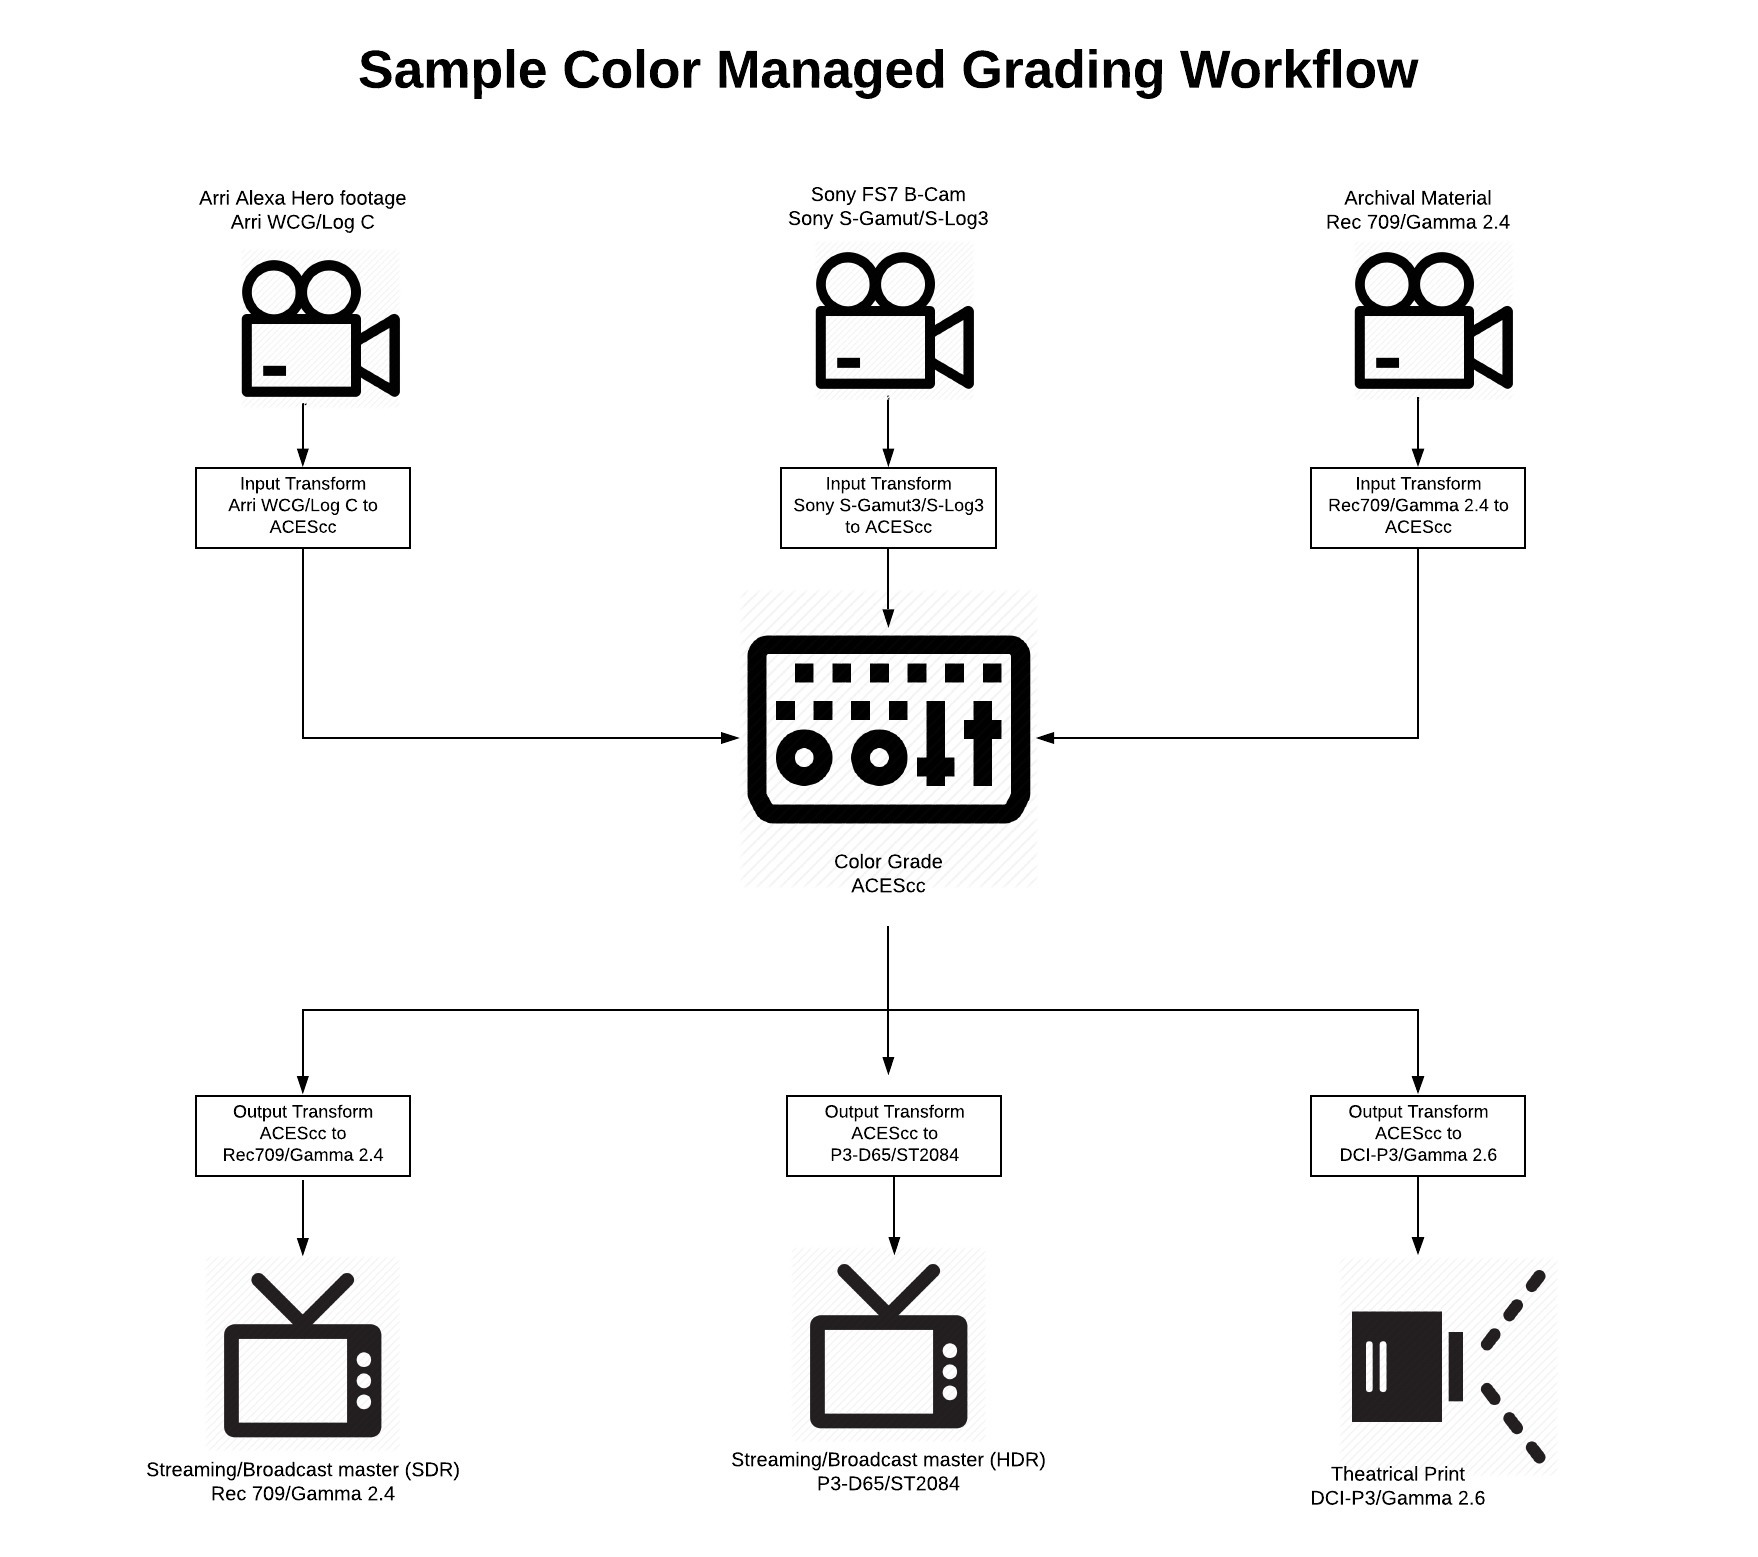 Sample Color Managed Grading Workflow